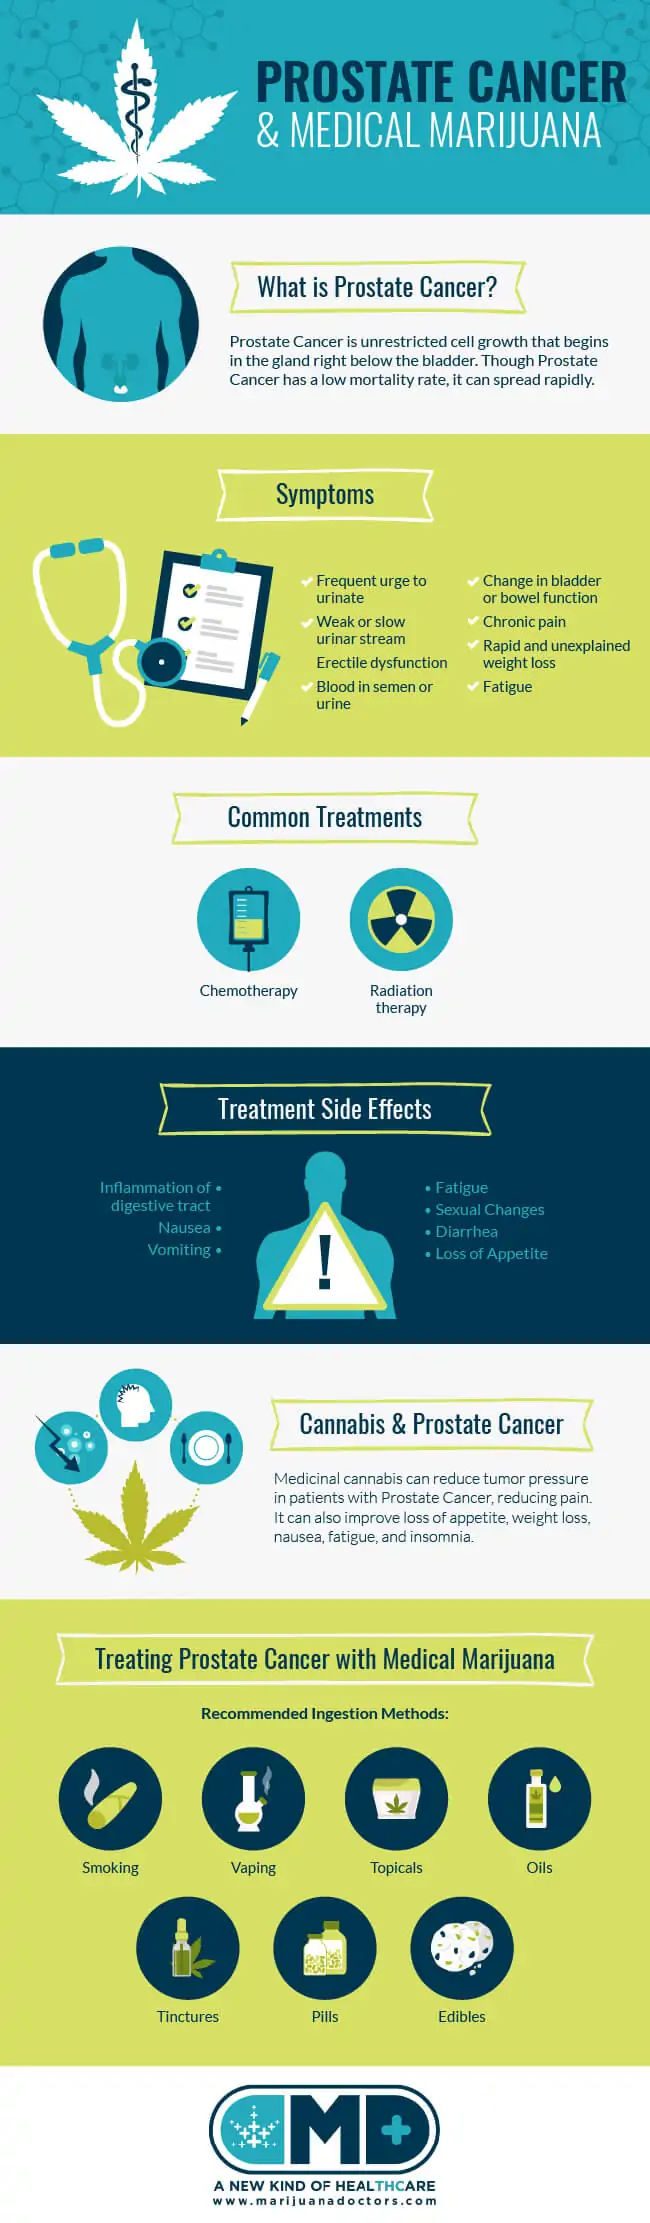 Medical Marijuana and Prostate Cancer